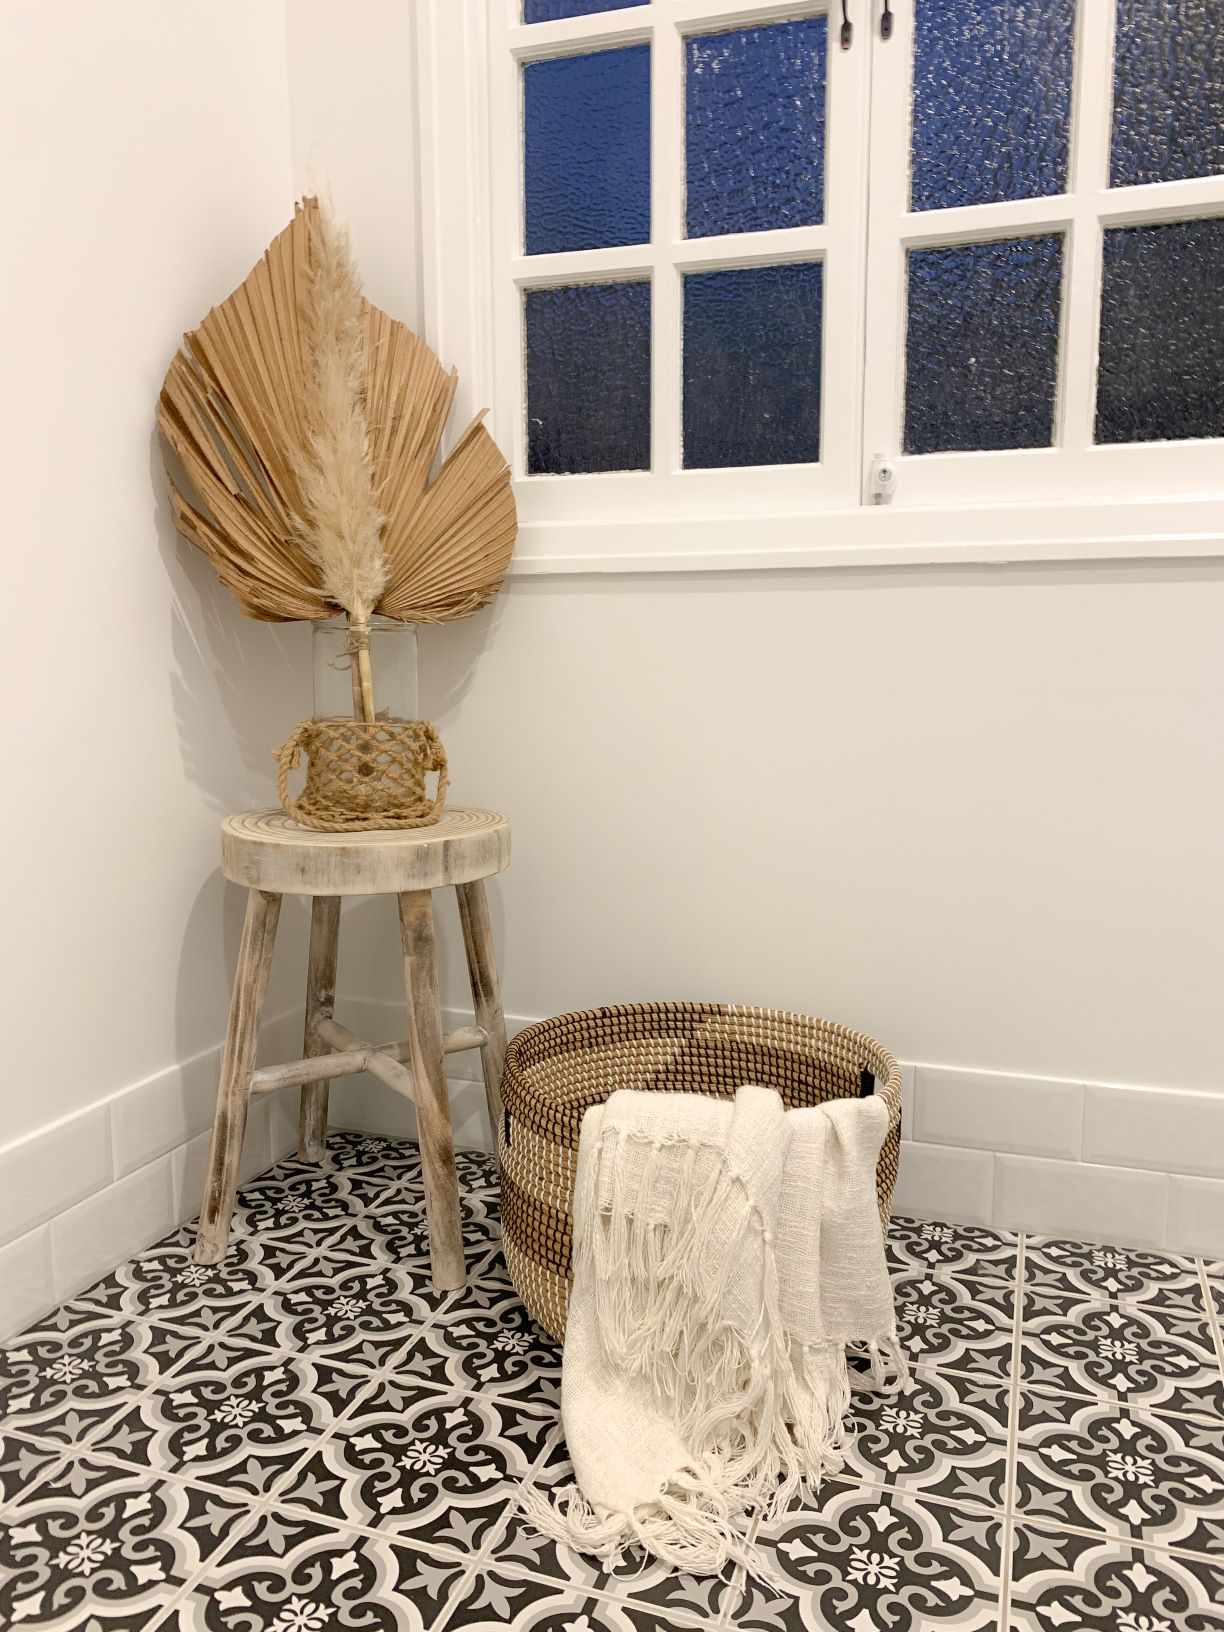 ascot laundry black and white floor tiles decor wicker basket